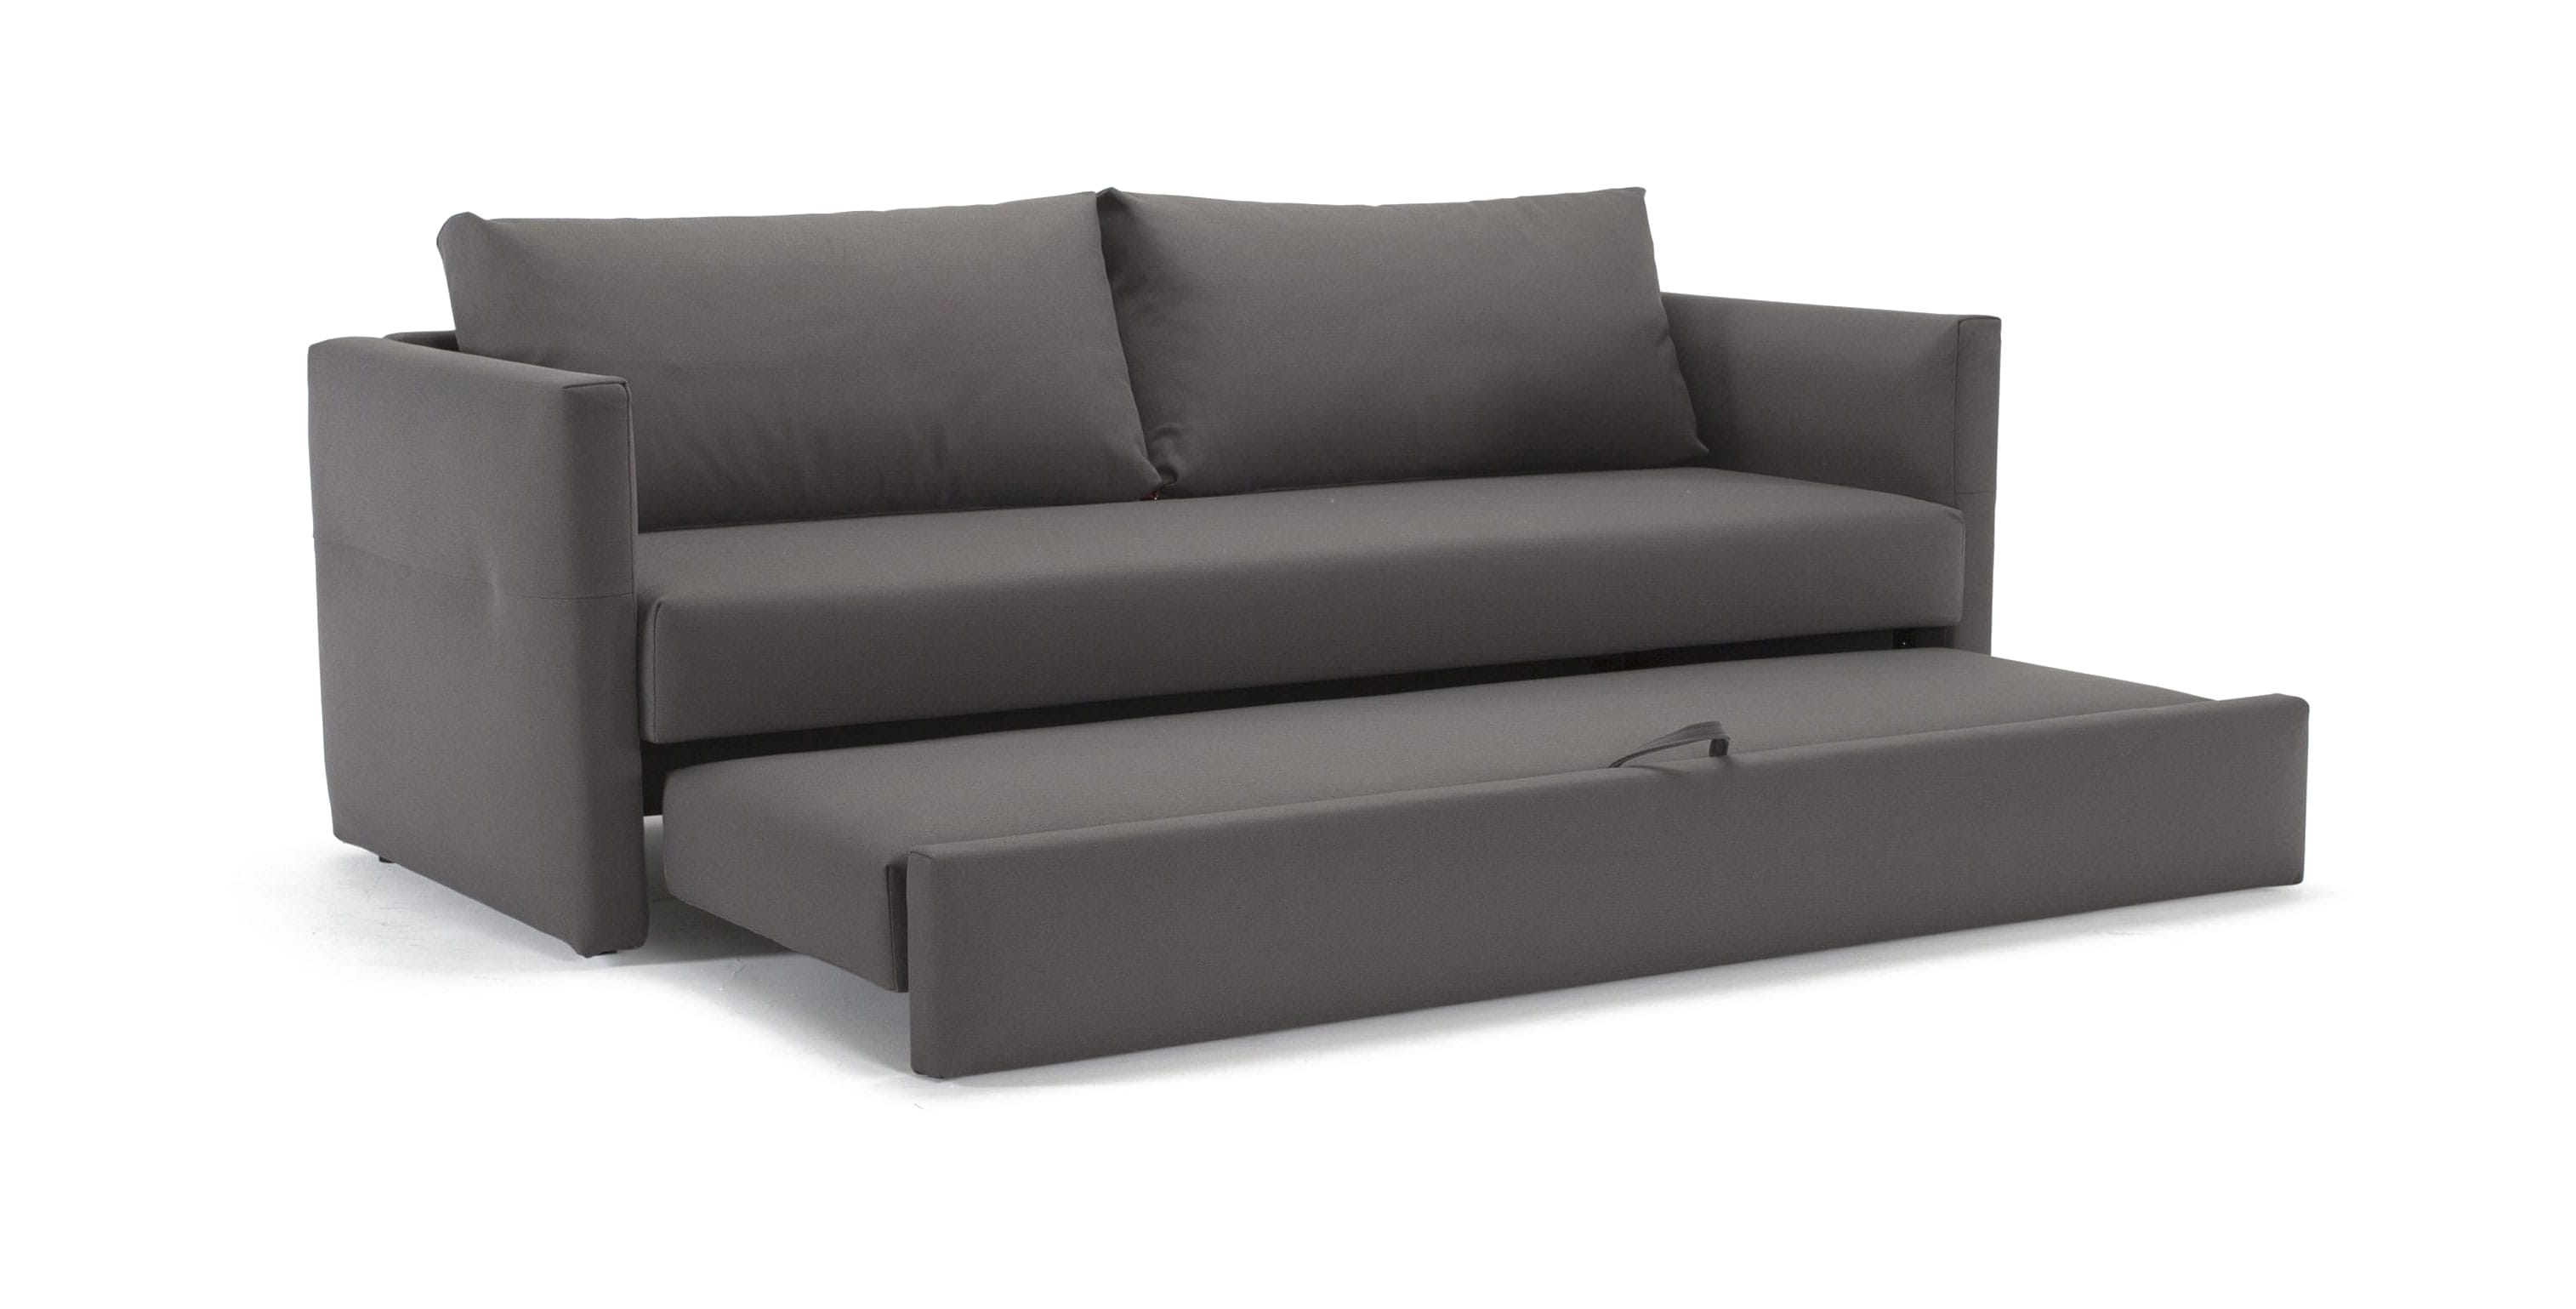 Toke Sofa Bed (Full Size) Coastal Seal Gray by Innovation